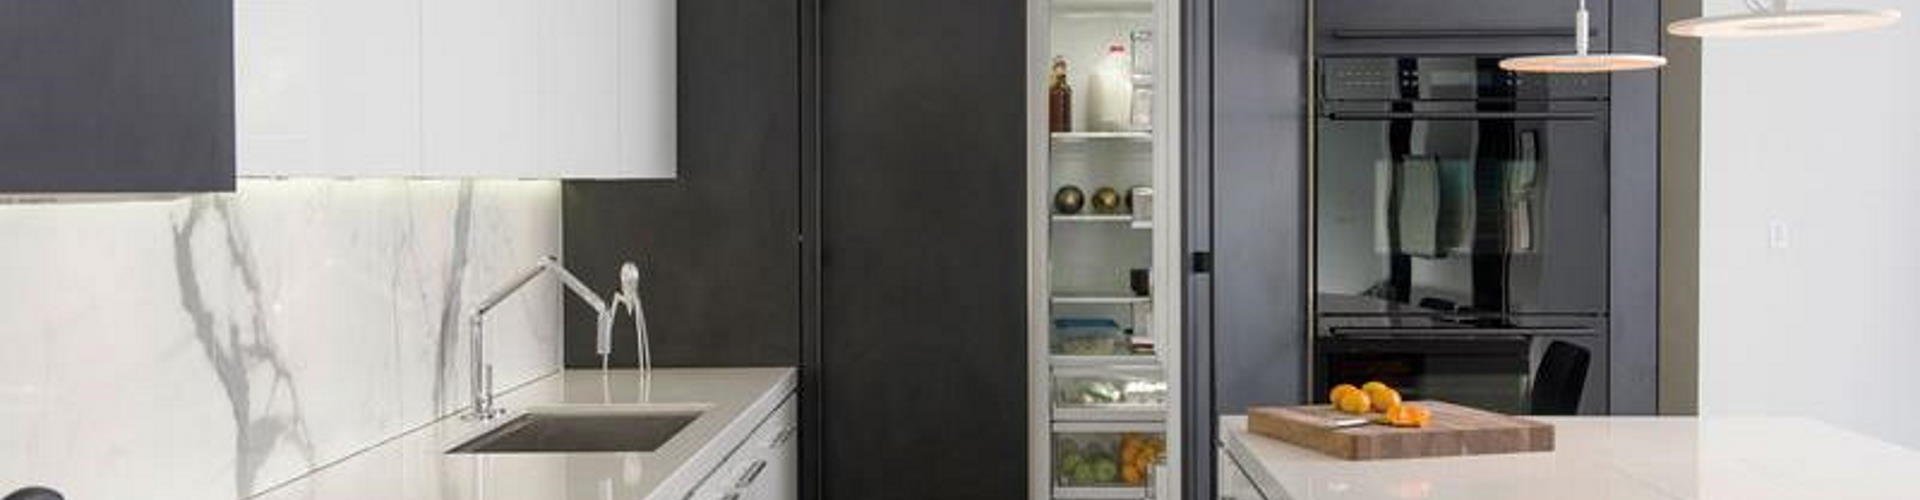 How to tell Sub-Zero refrigerator is broken